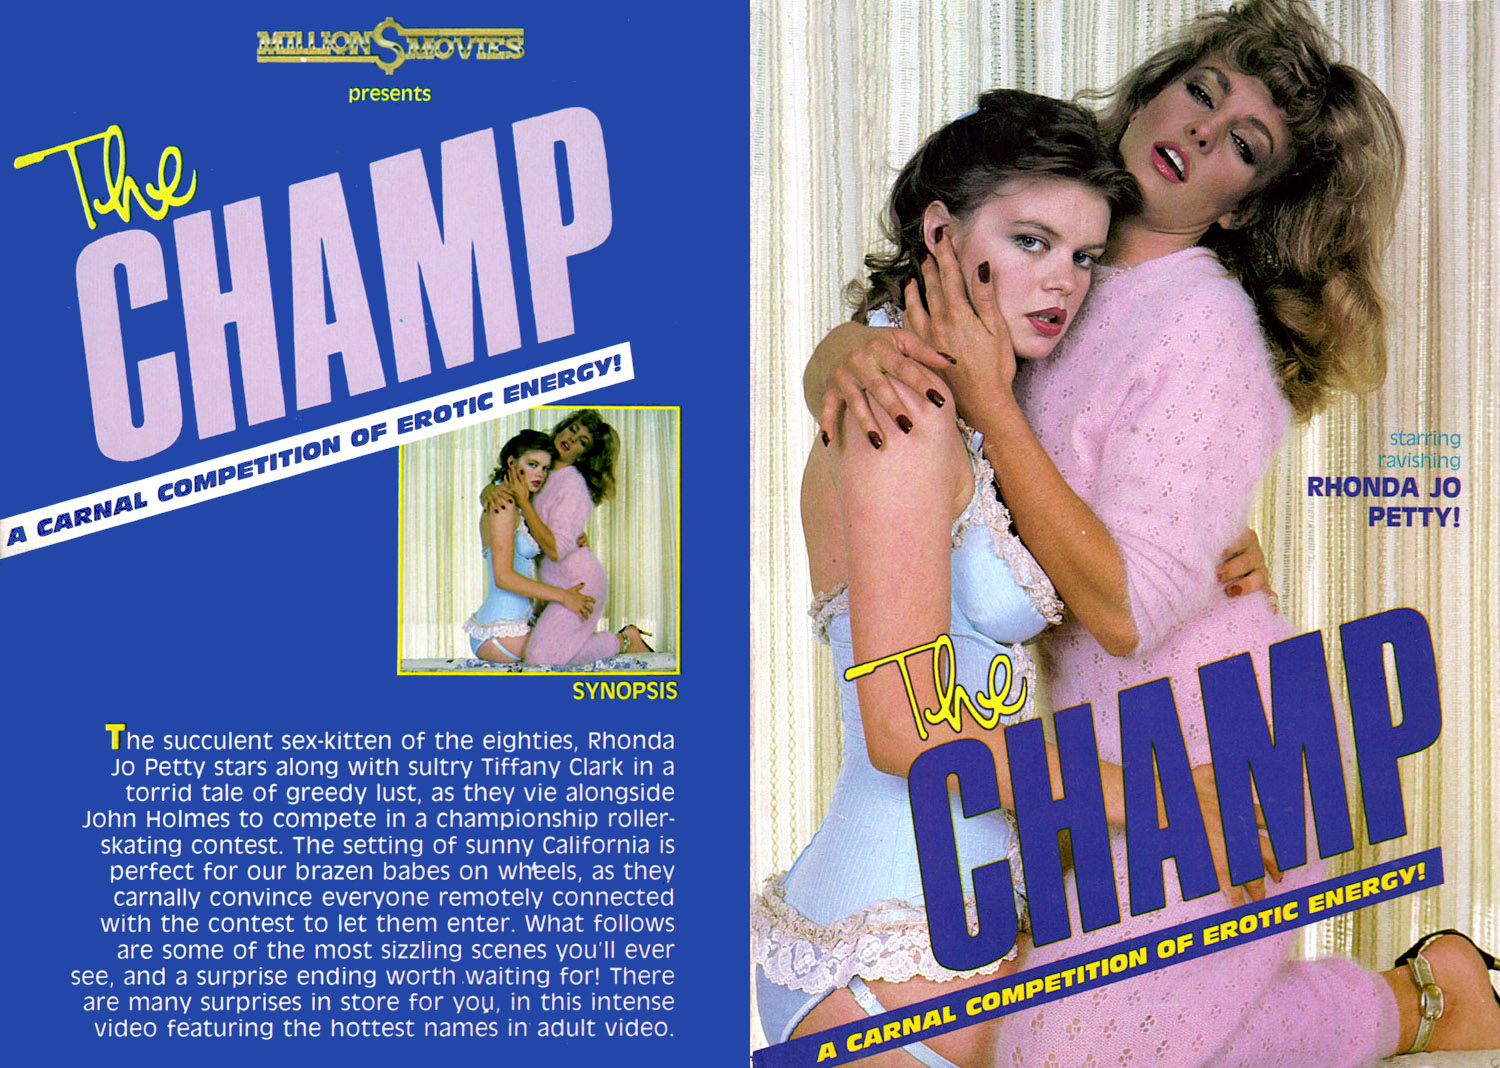 The Champ - 1980